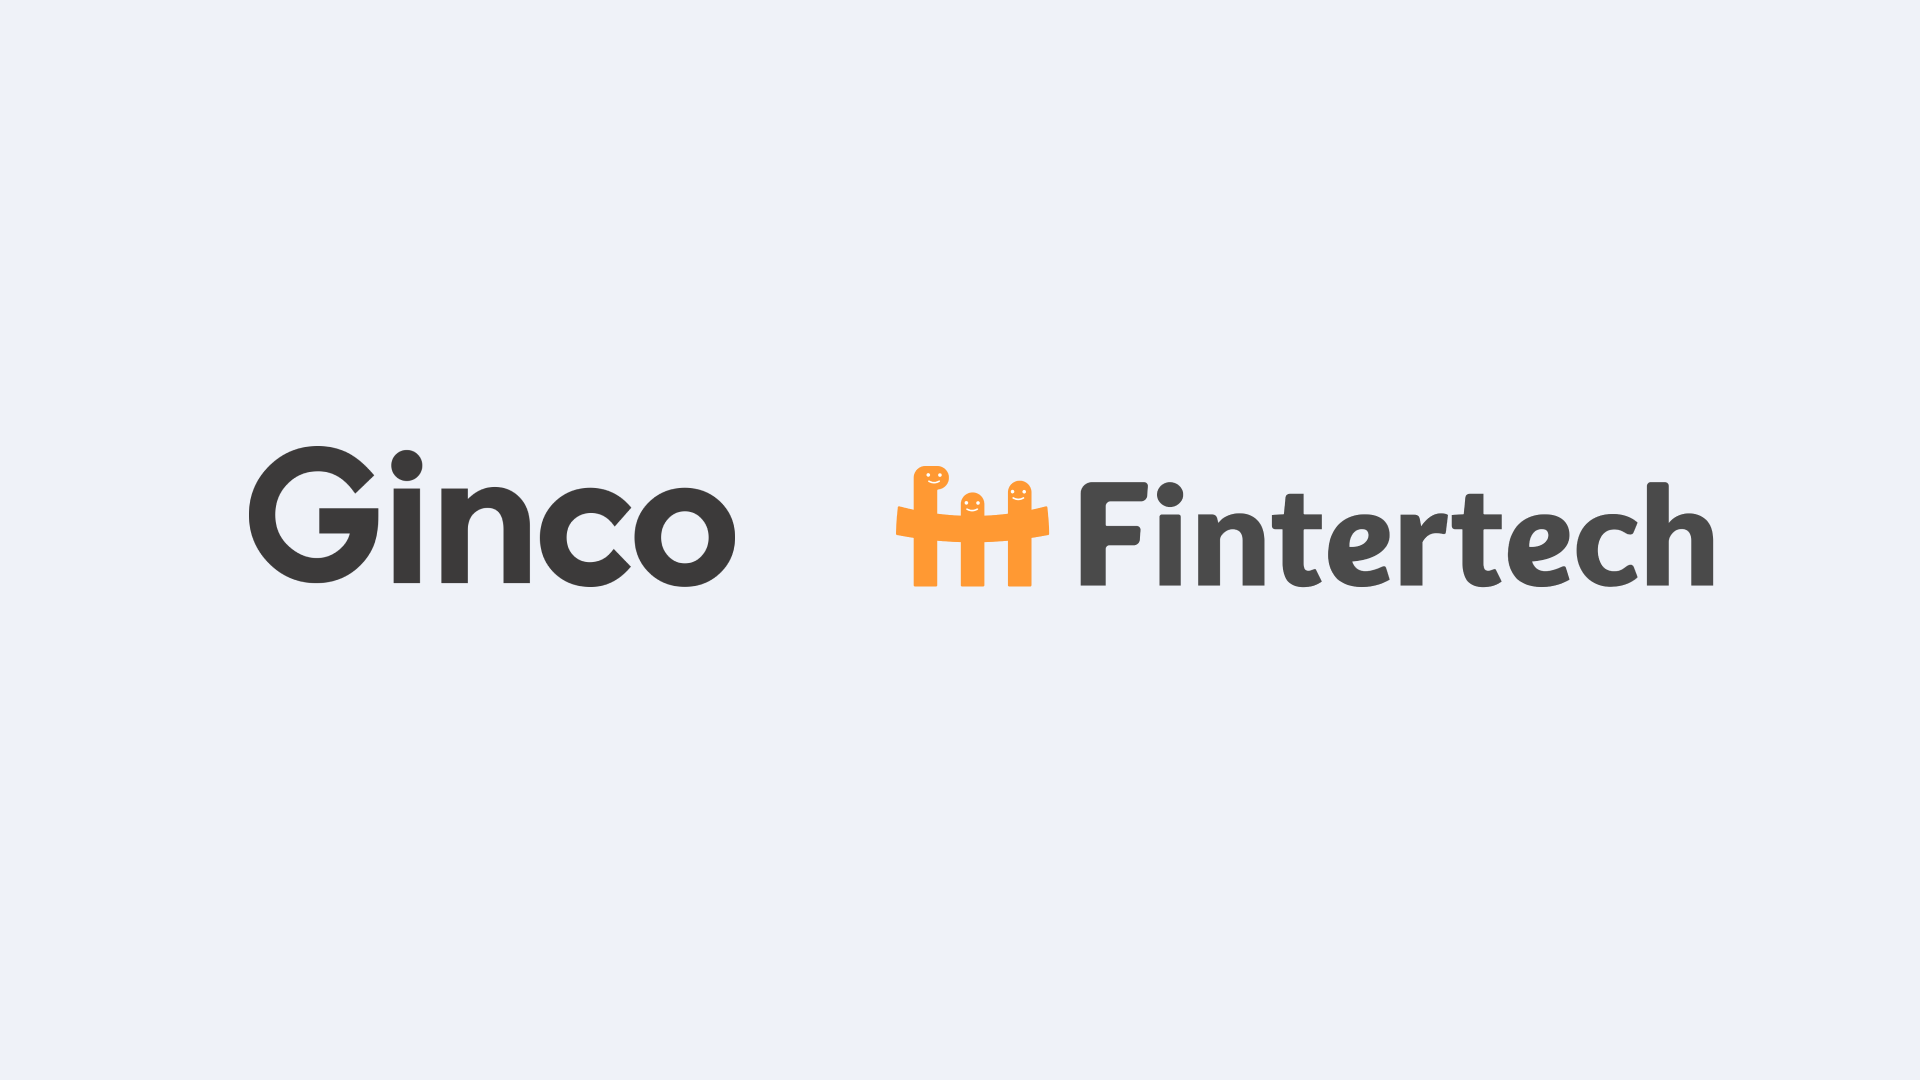 Fintertech株式会社との取り組みについて、coindesk japanに掲載されました。